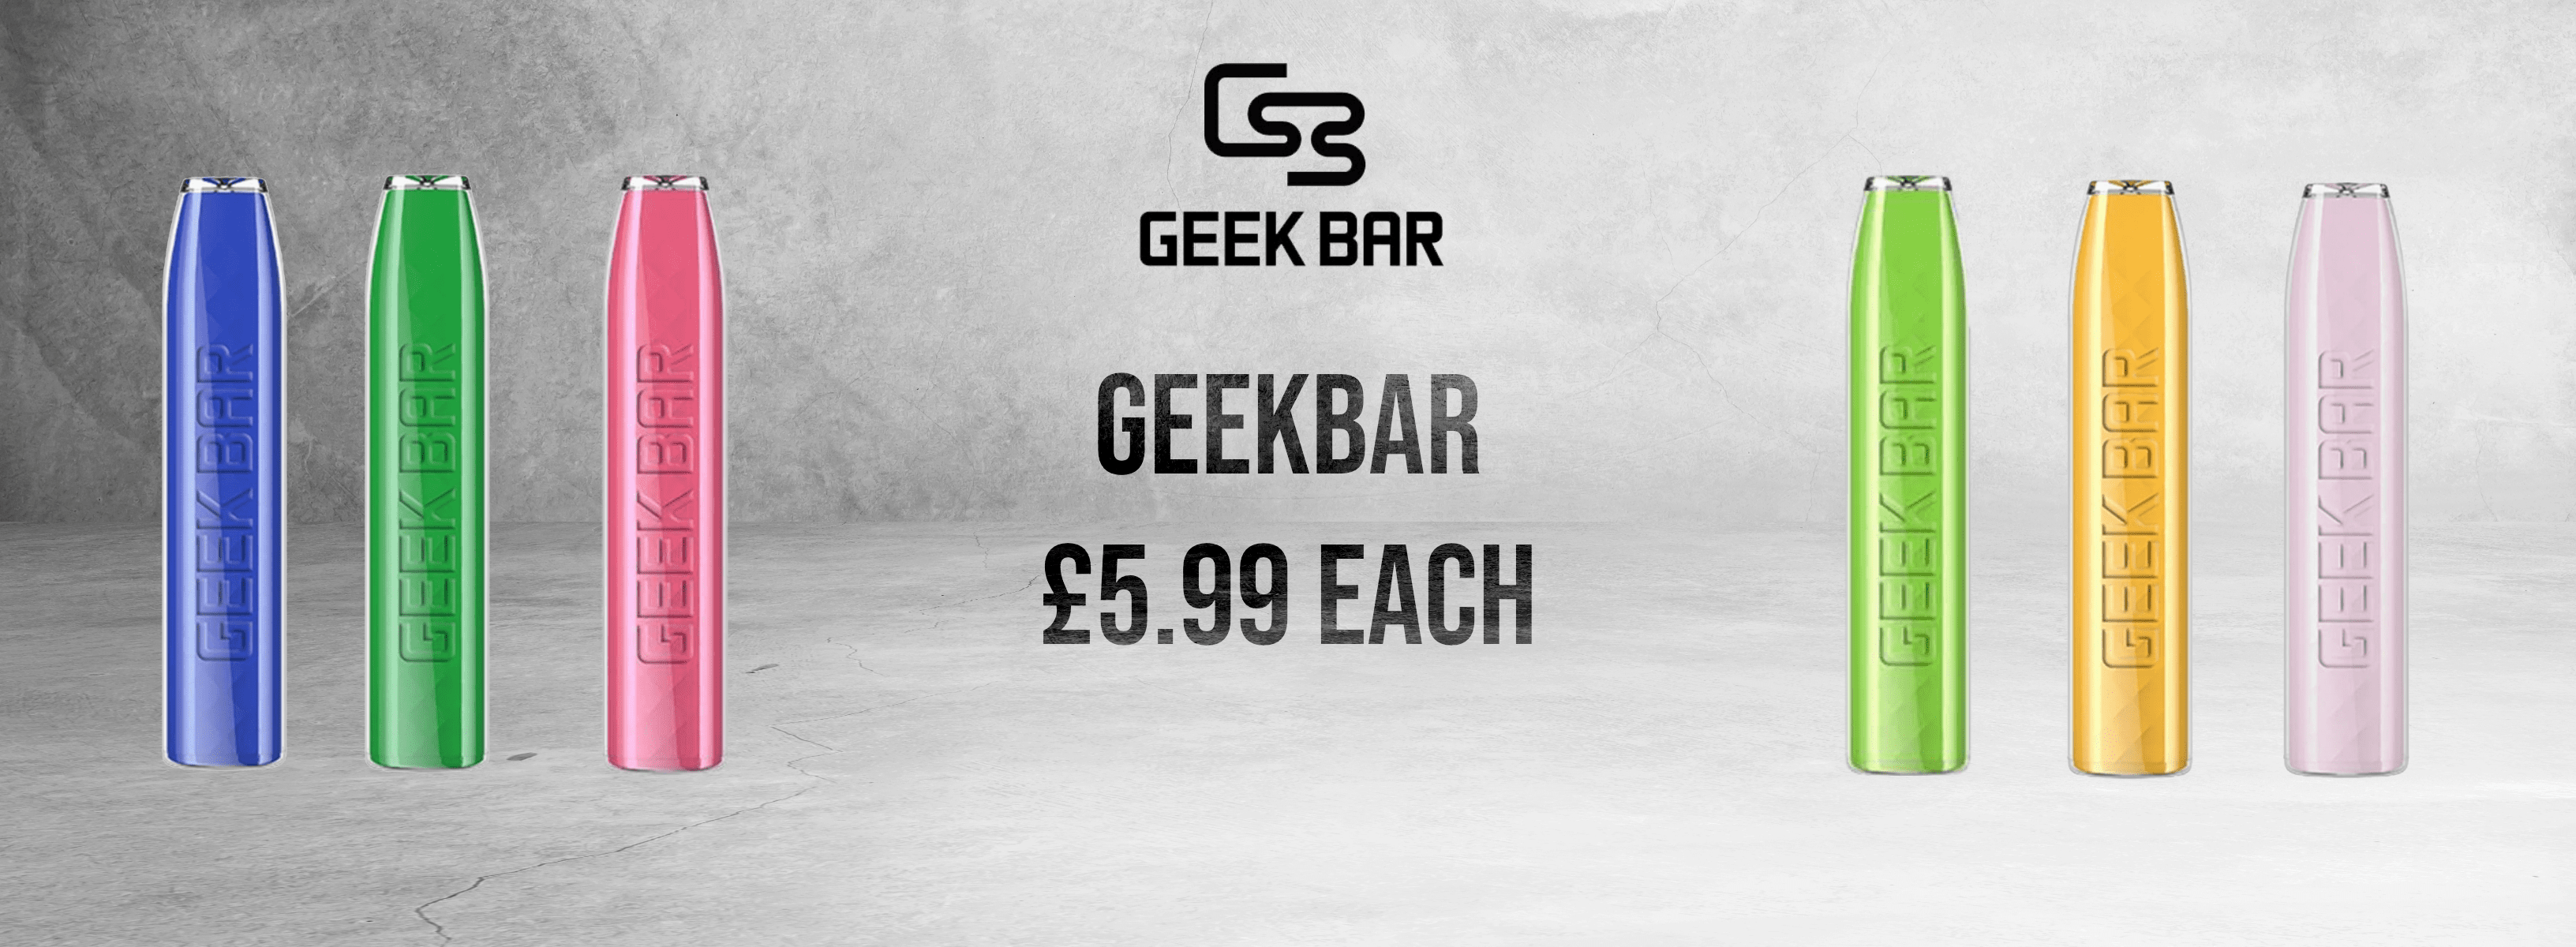 Advert for Geek Bar disposable vapes